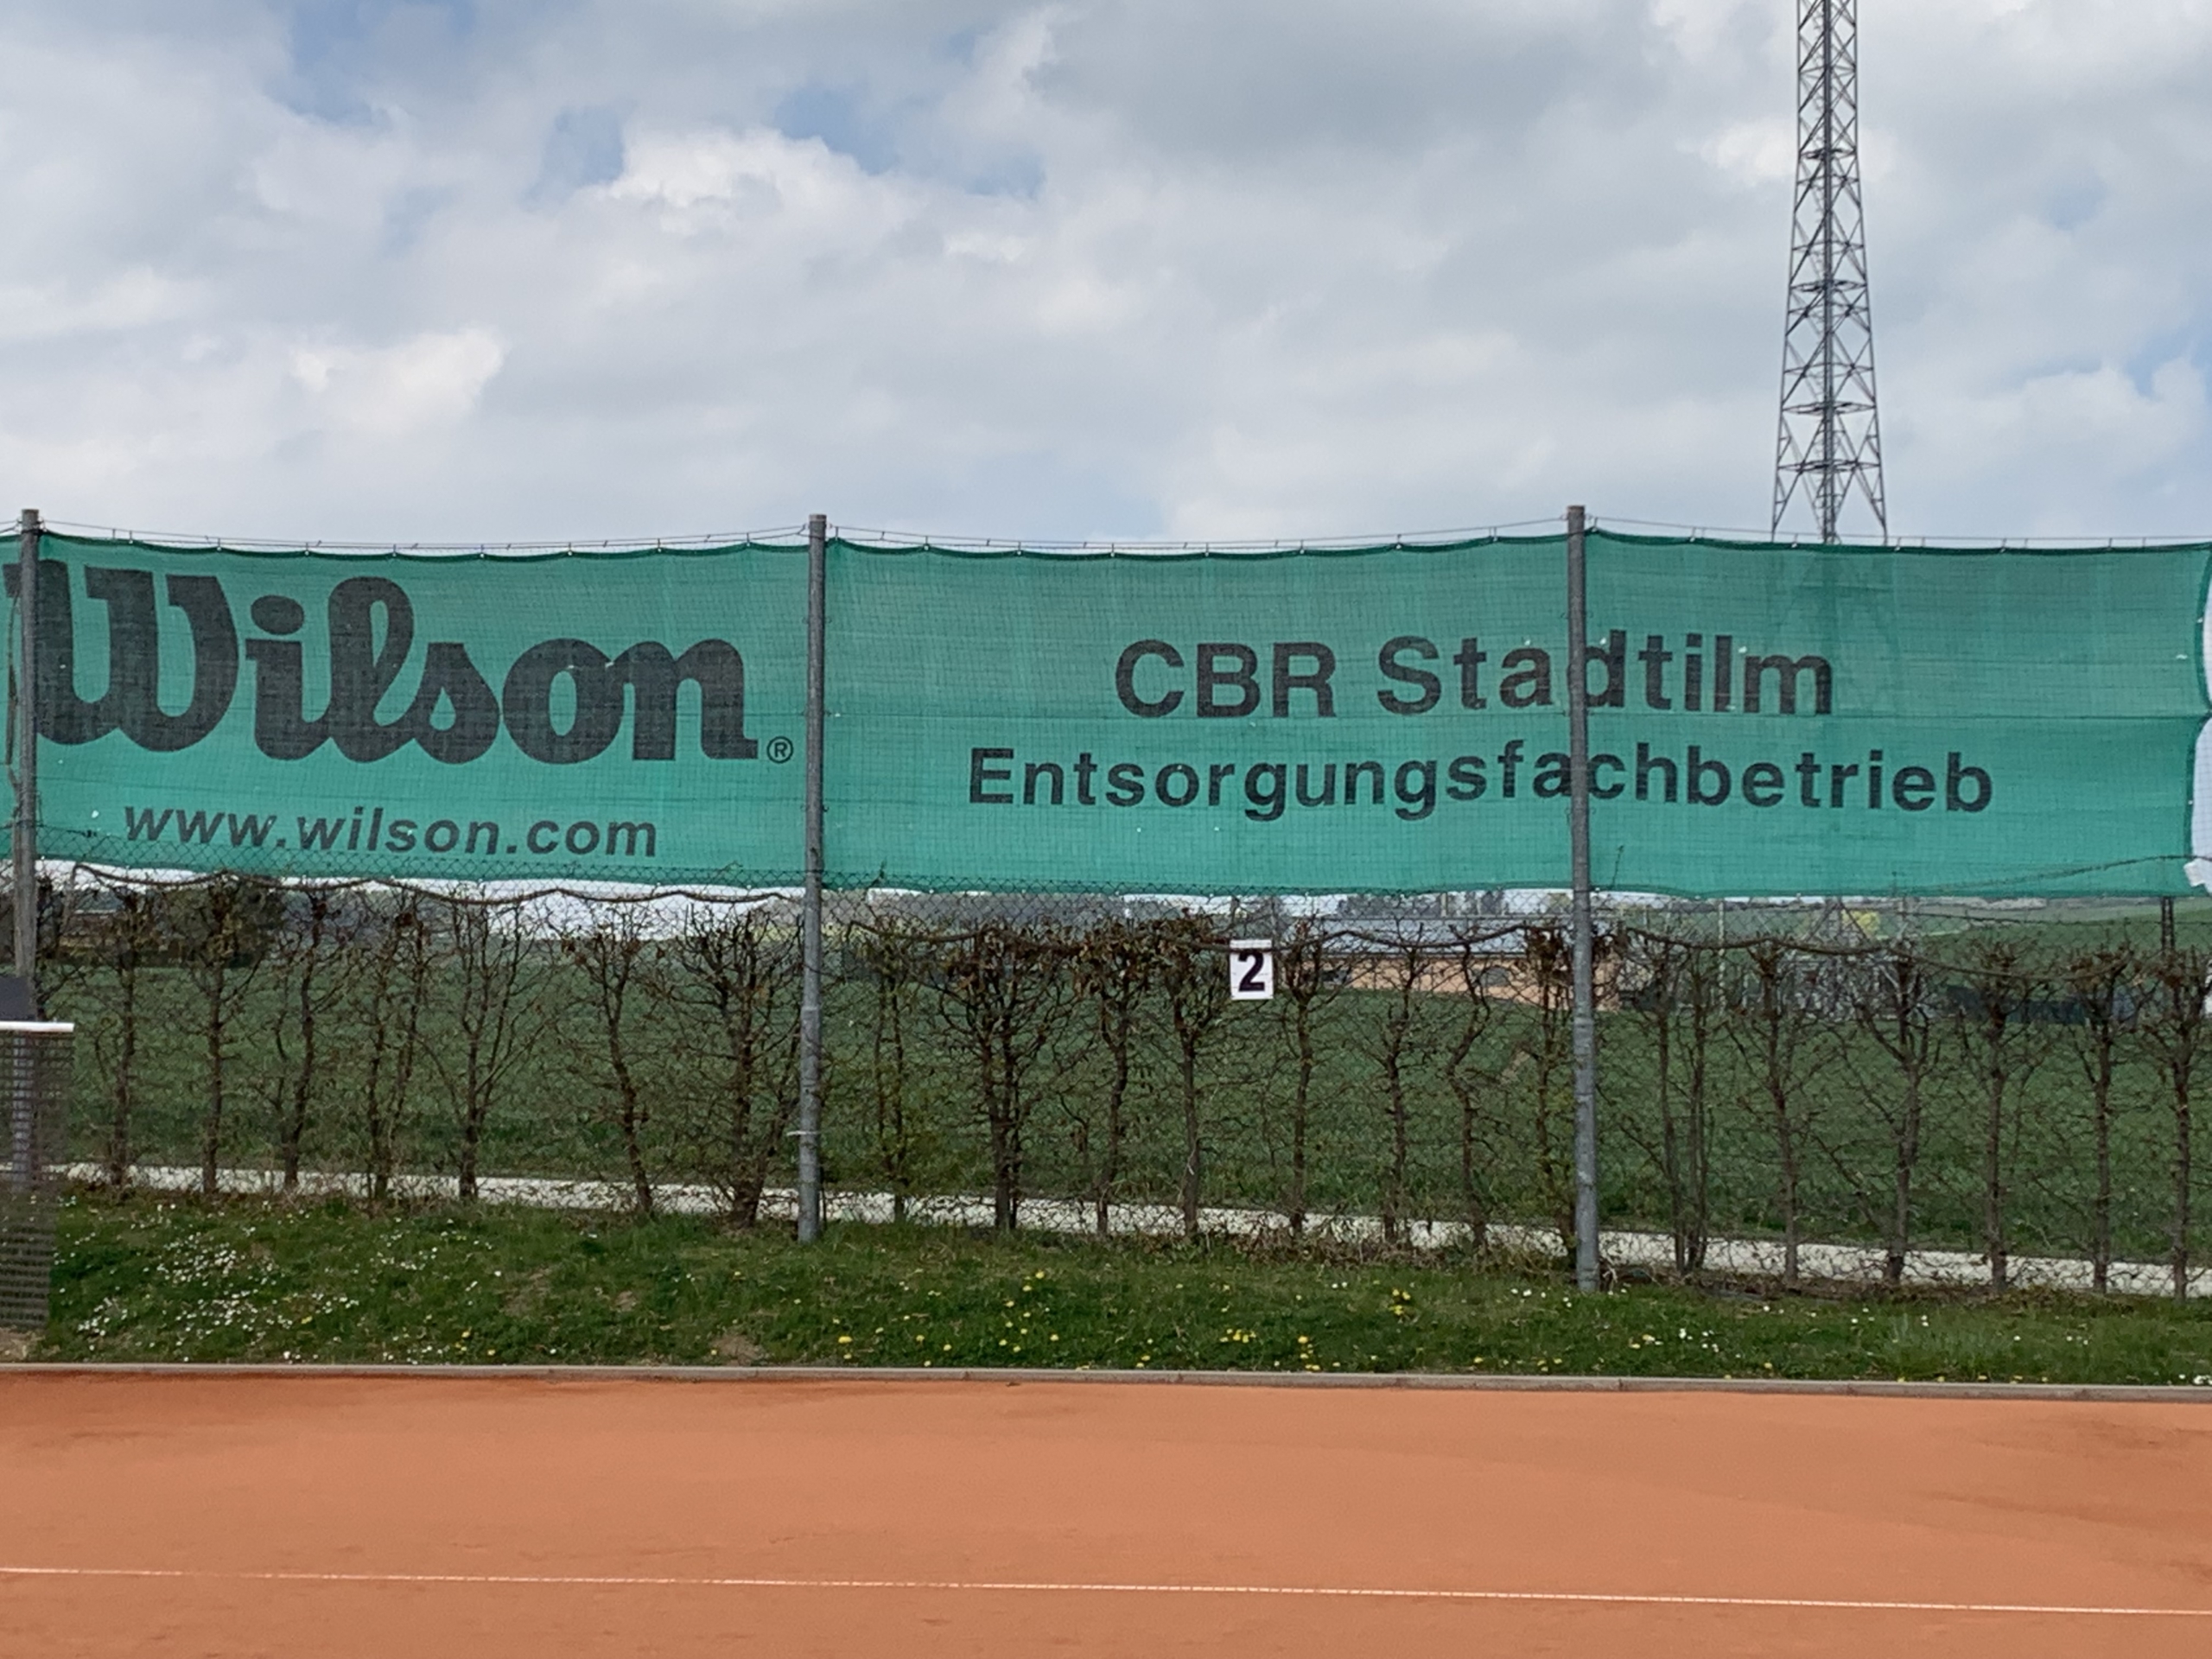 "CBR" Containerdienst Baustoffrecycling GmbH